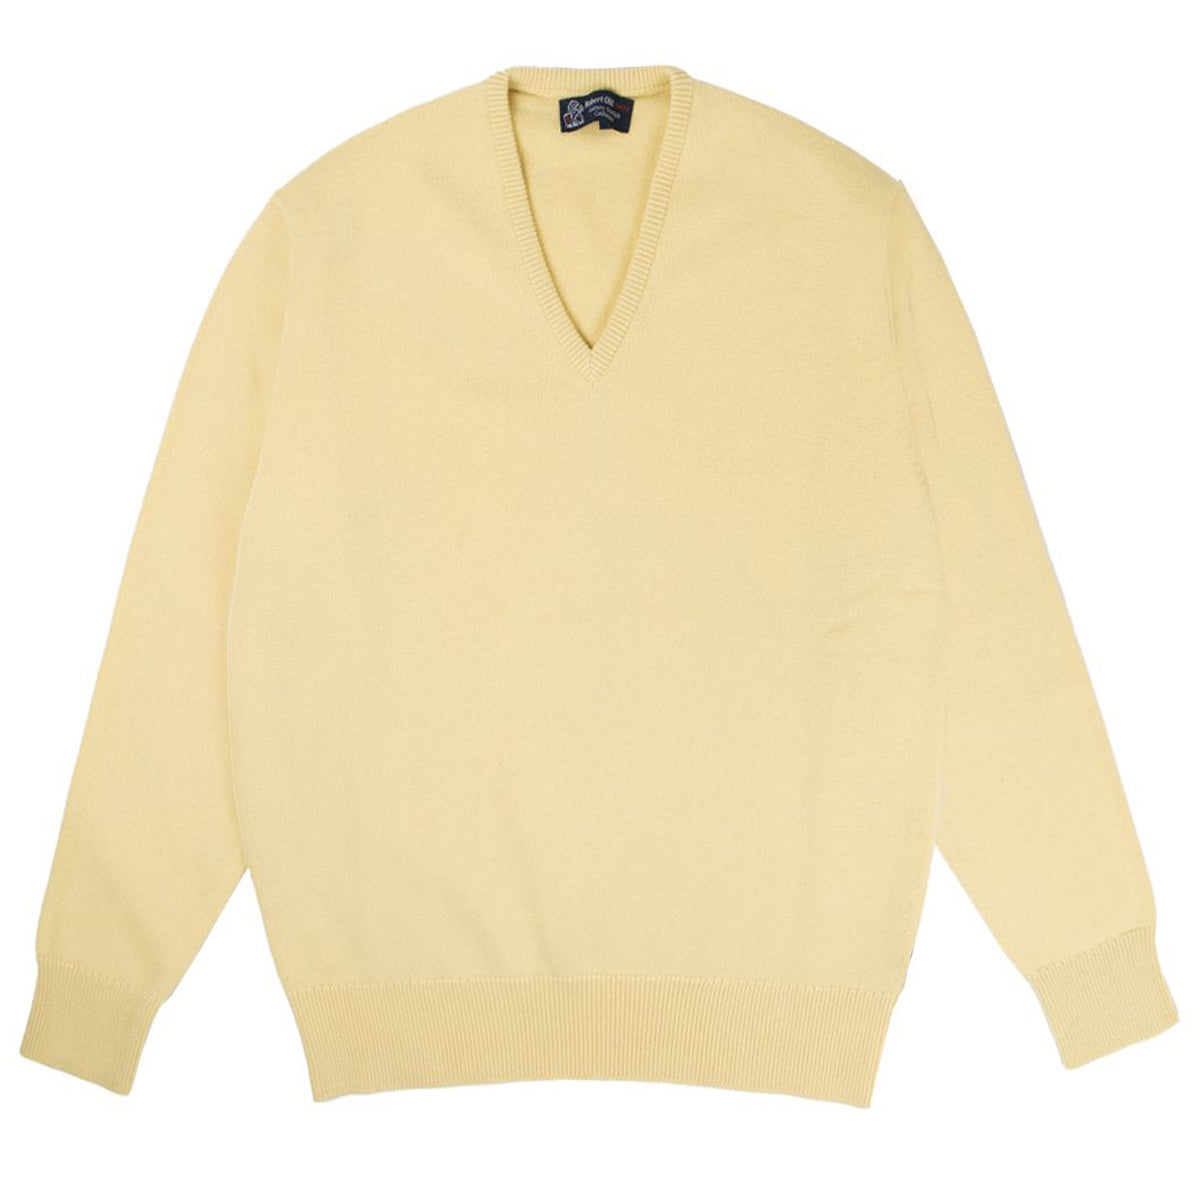 Lemon Frost Tobermorey 4ply V-Neck Cashmere Sweater  Robert Old   